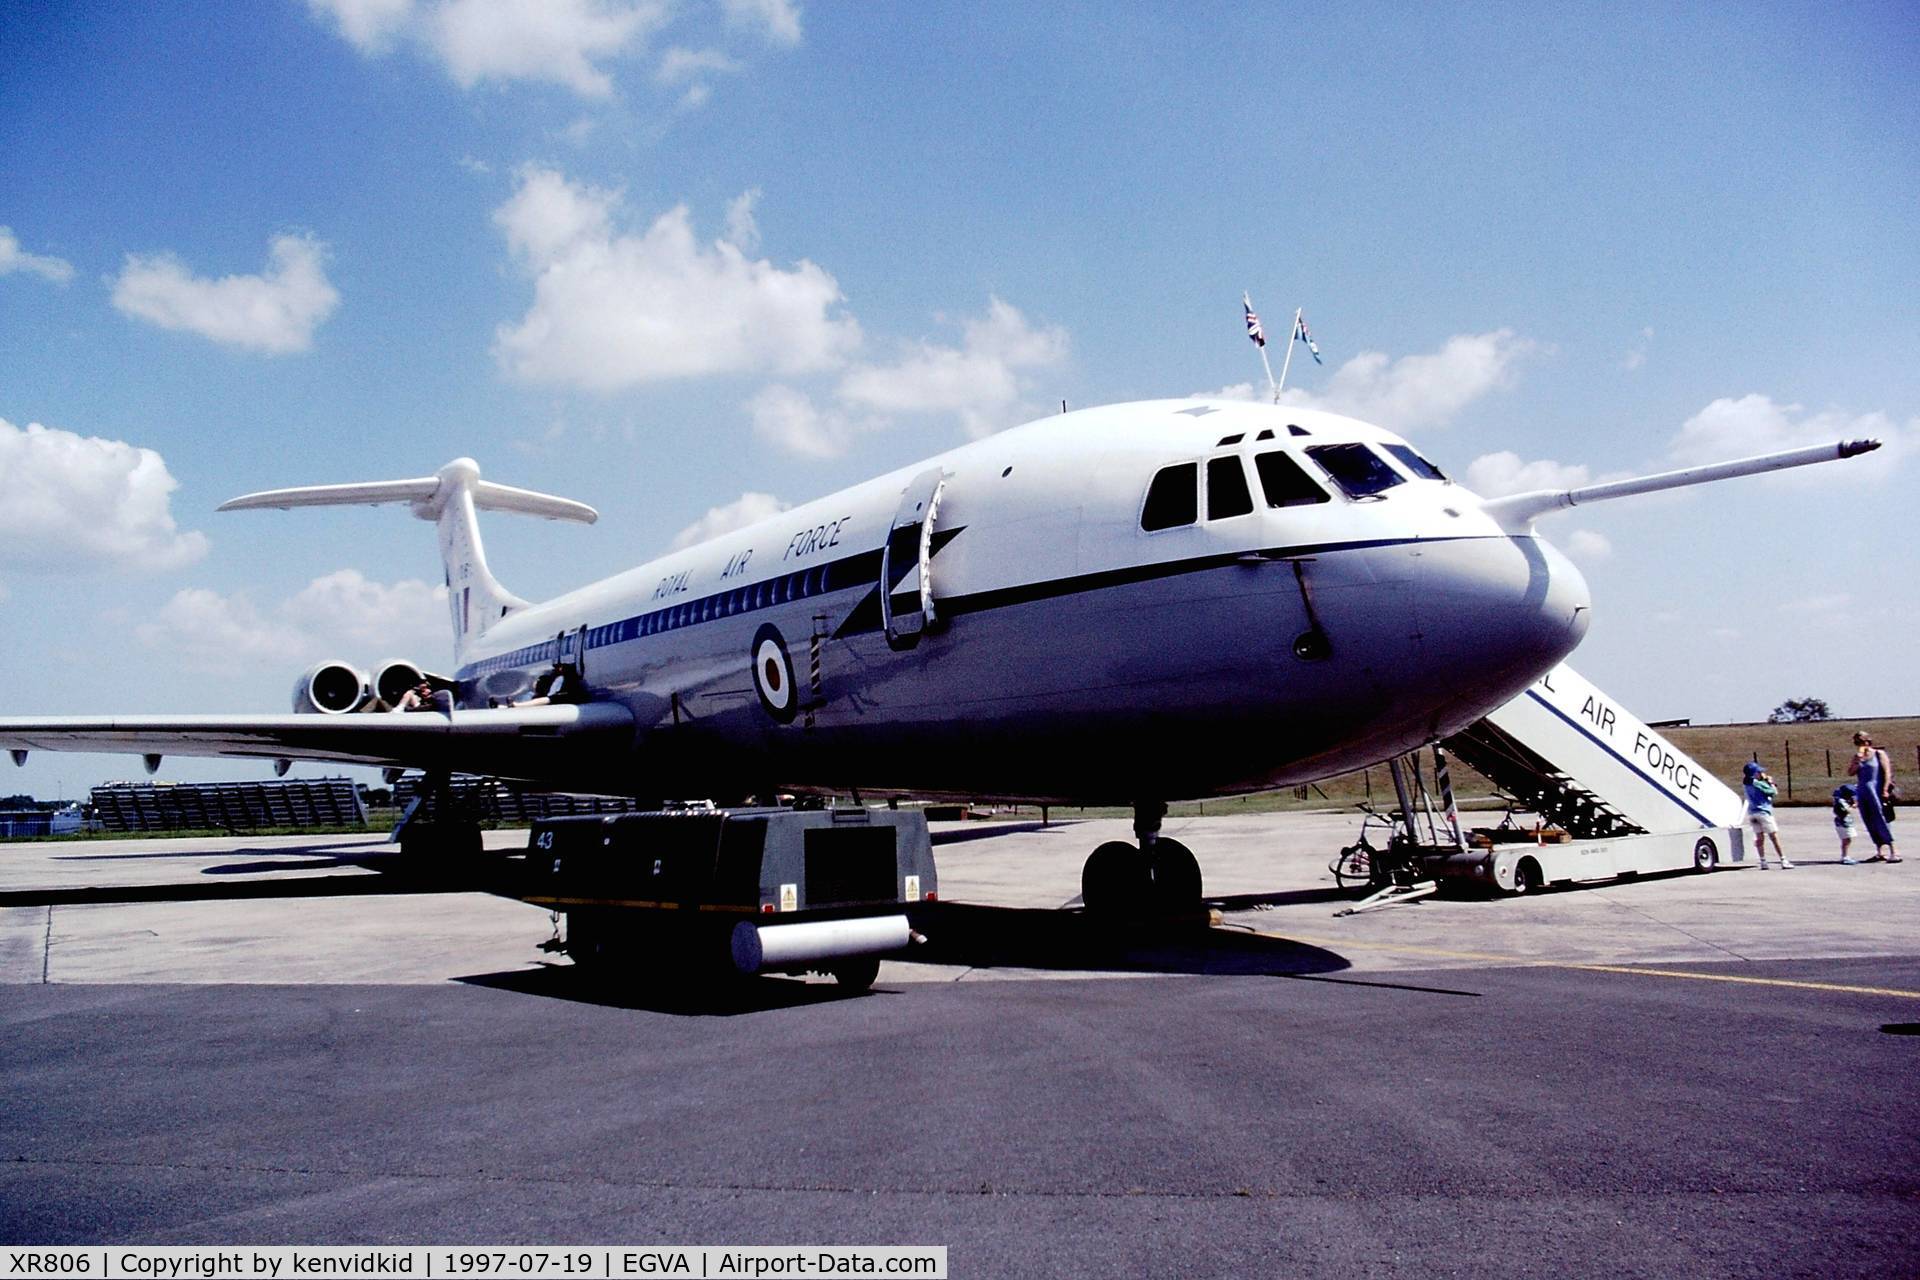 XR806, 1967 Vickers VC10 C.1K C/N 826, At the 1997 Royal International Air Tattoo.